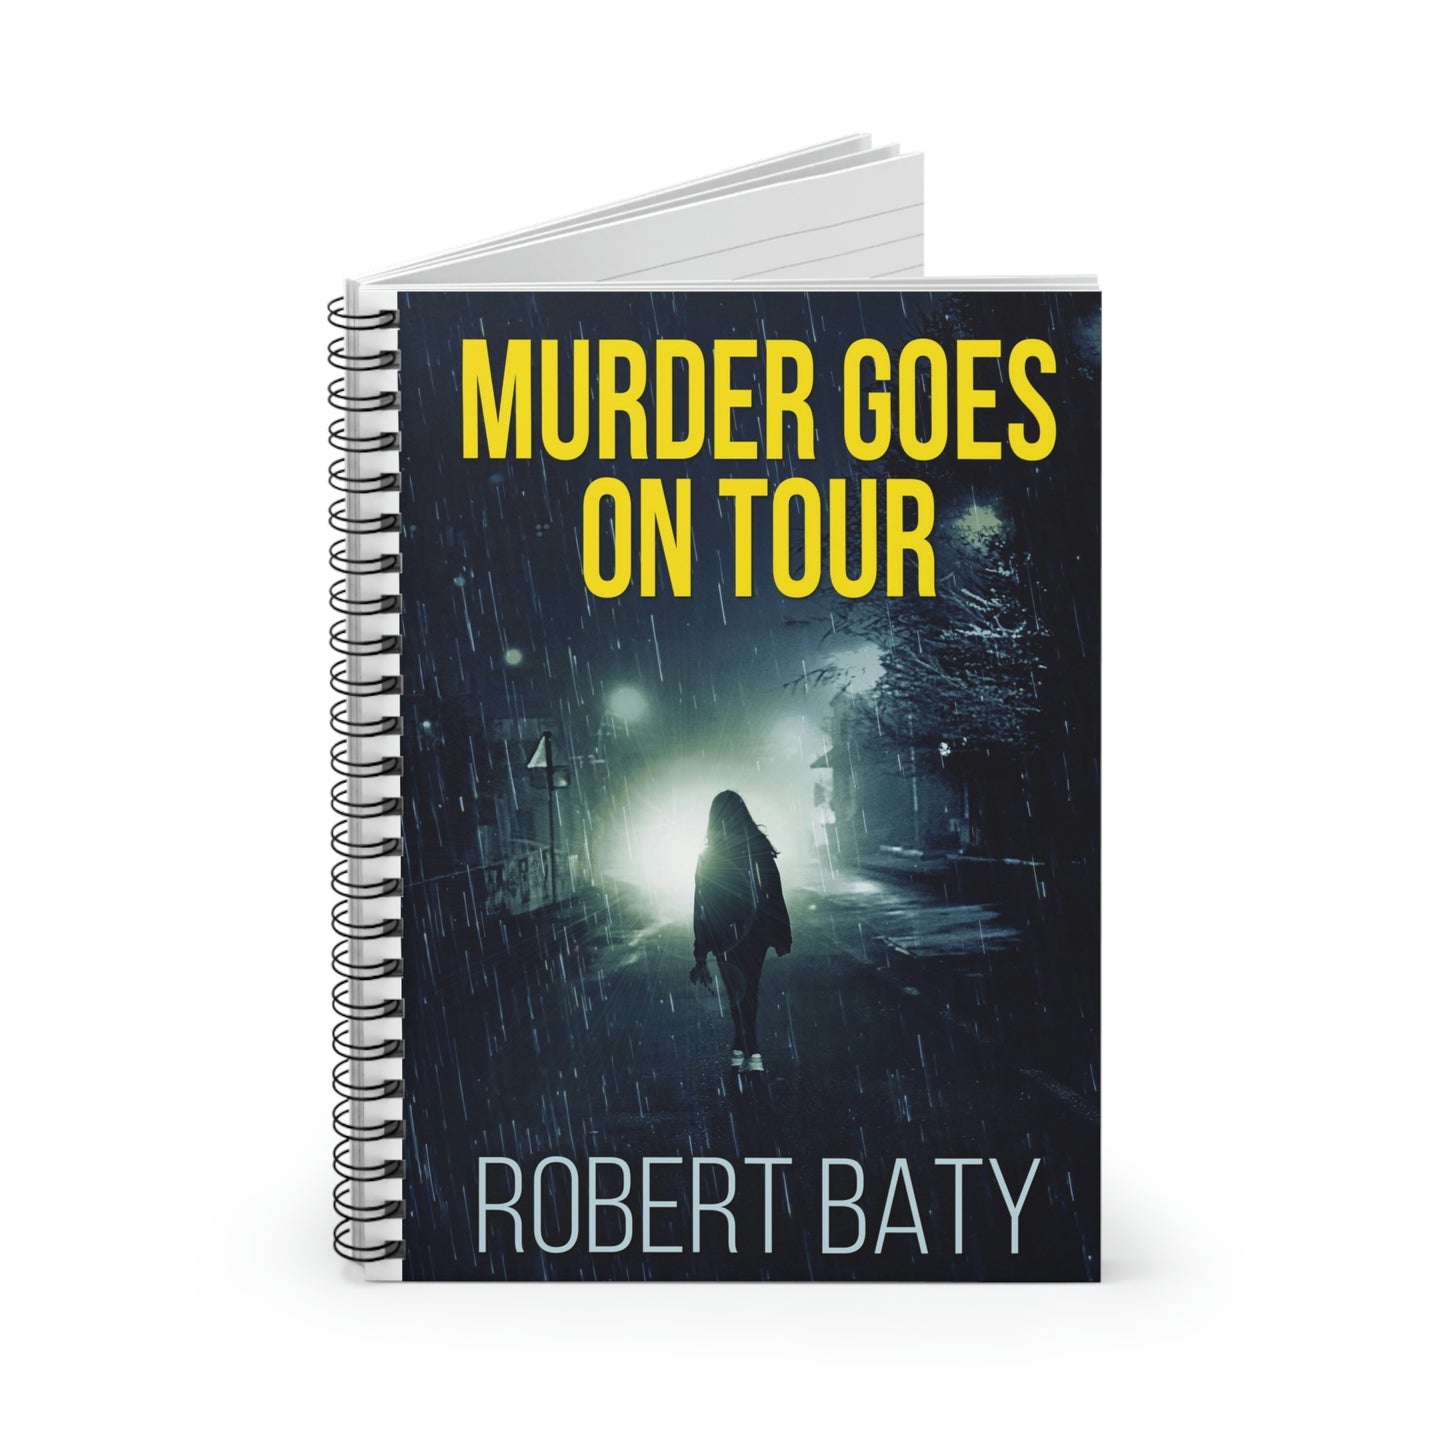 Murder Goes On Tour - Spiral Notebook